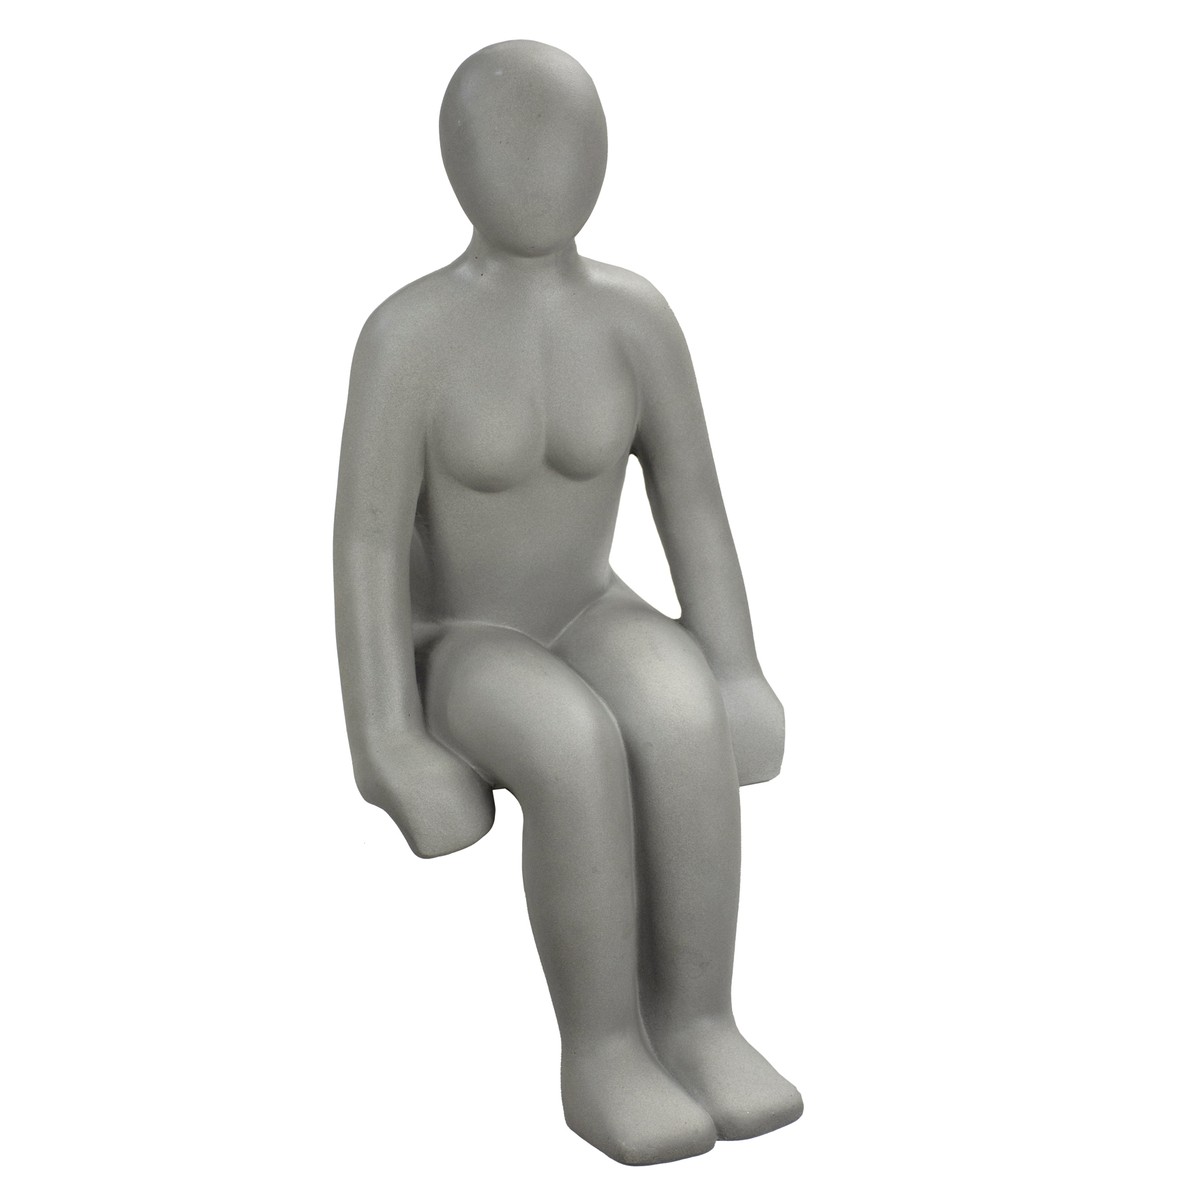   Deco femme assisepolystone Gris 37.5x69cm